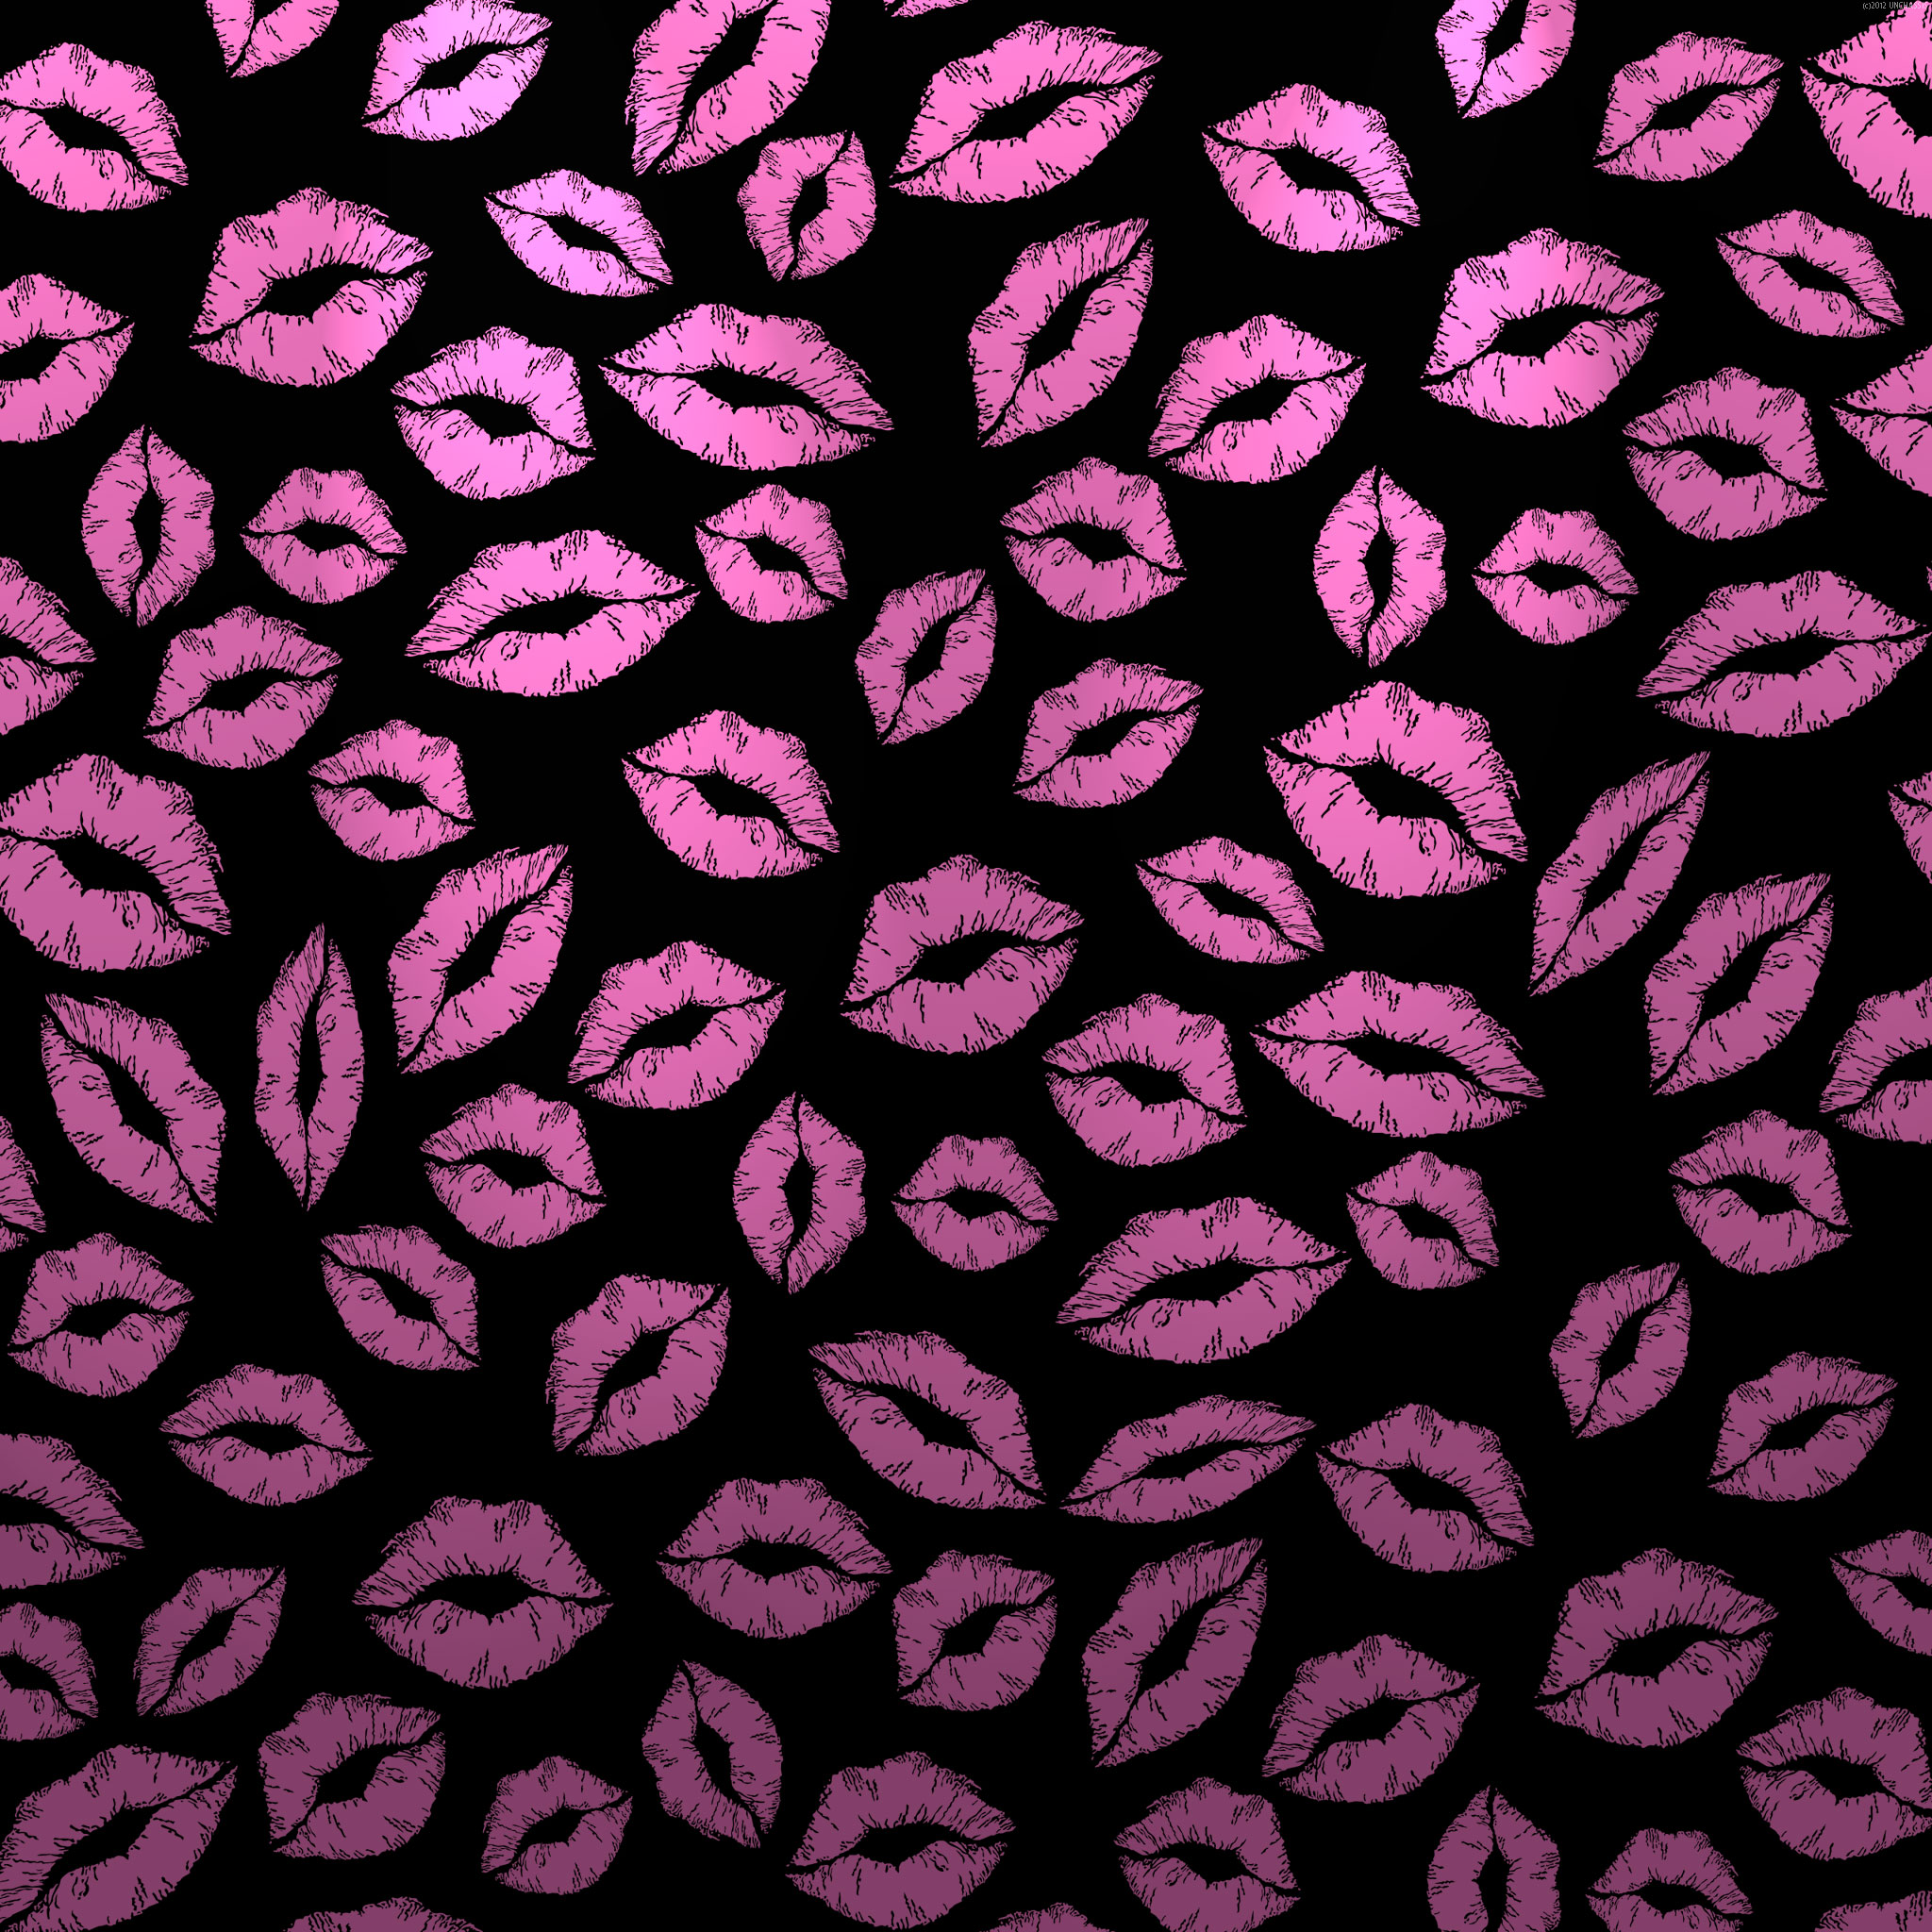  pink and black zebra print wallpaper hd pink and black zebra wallpaper 2048x2048